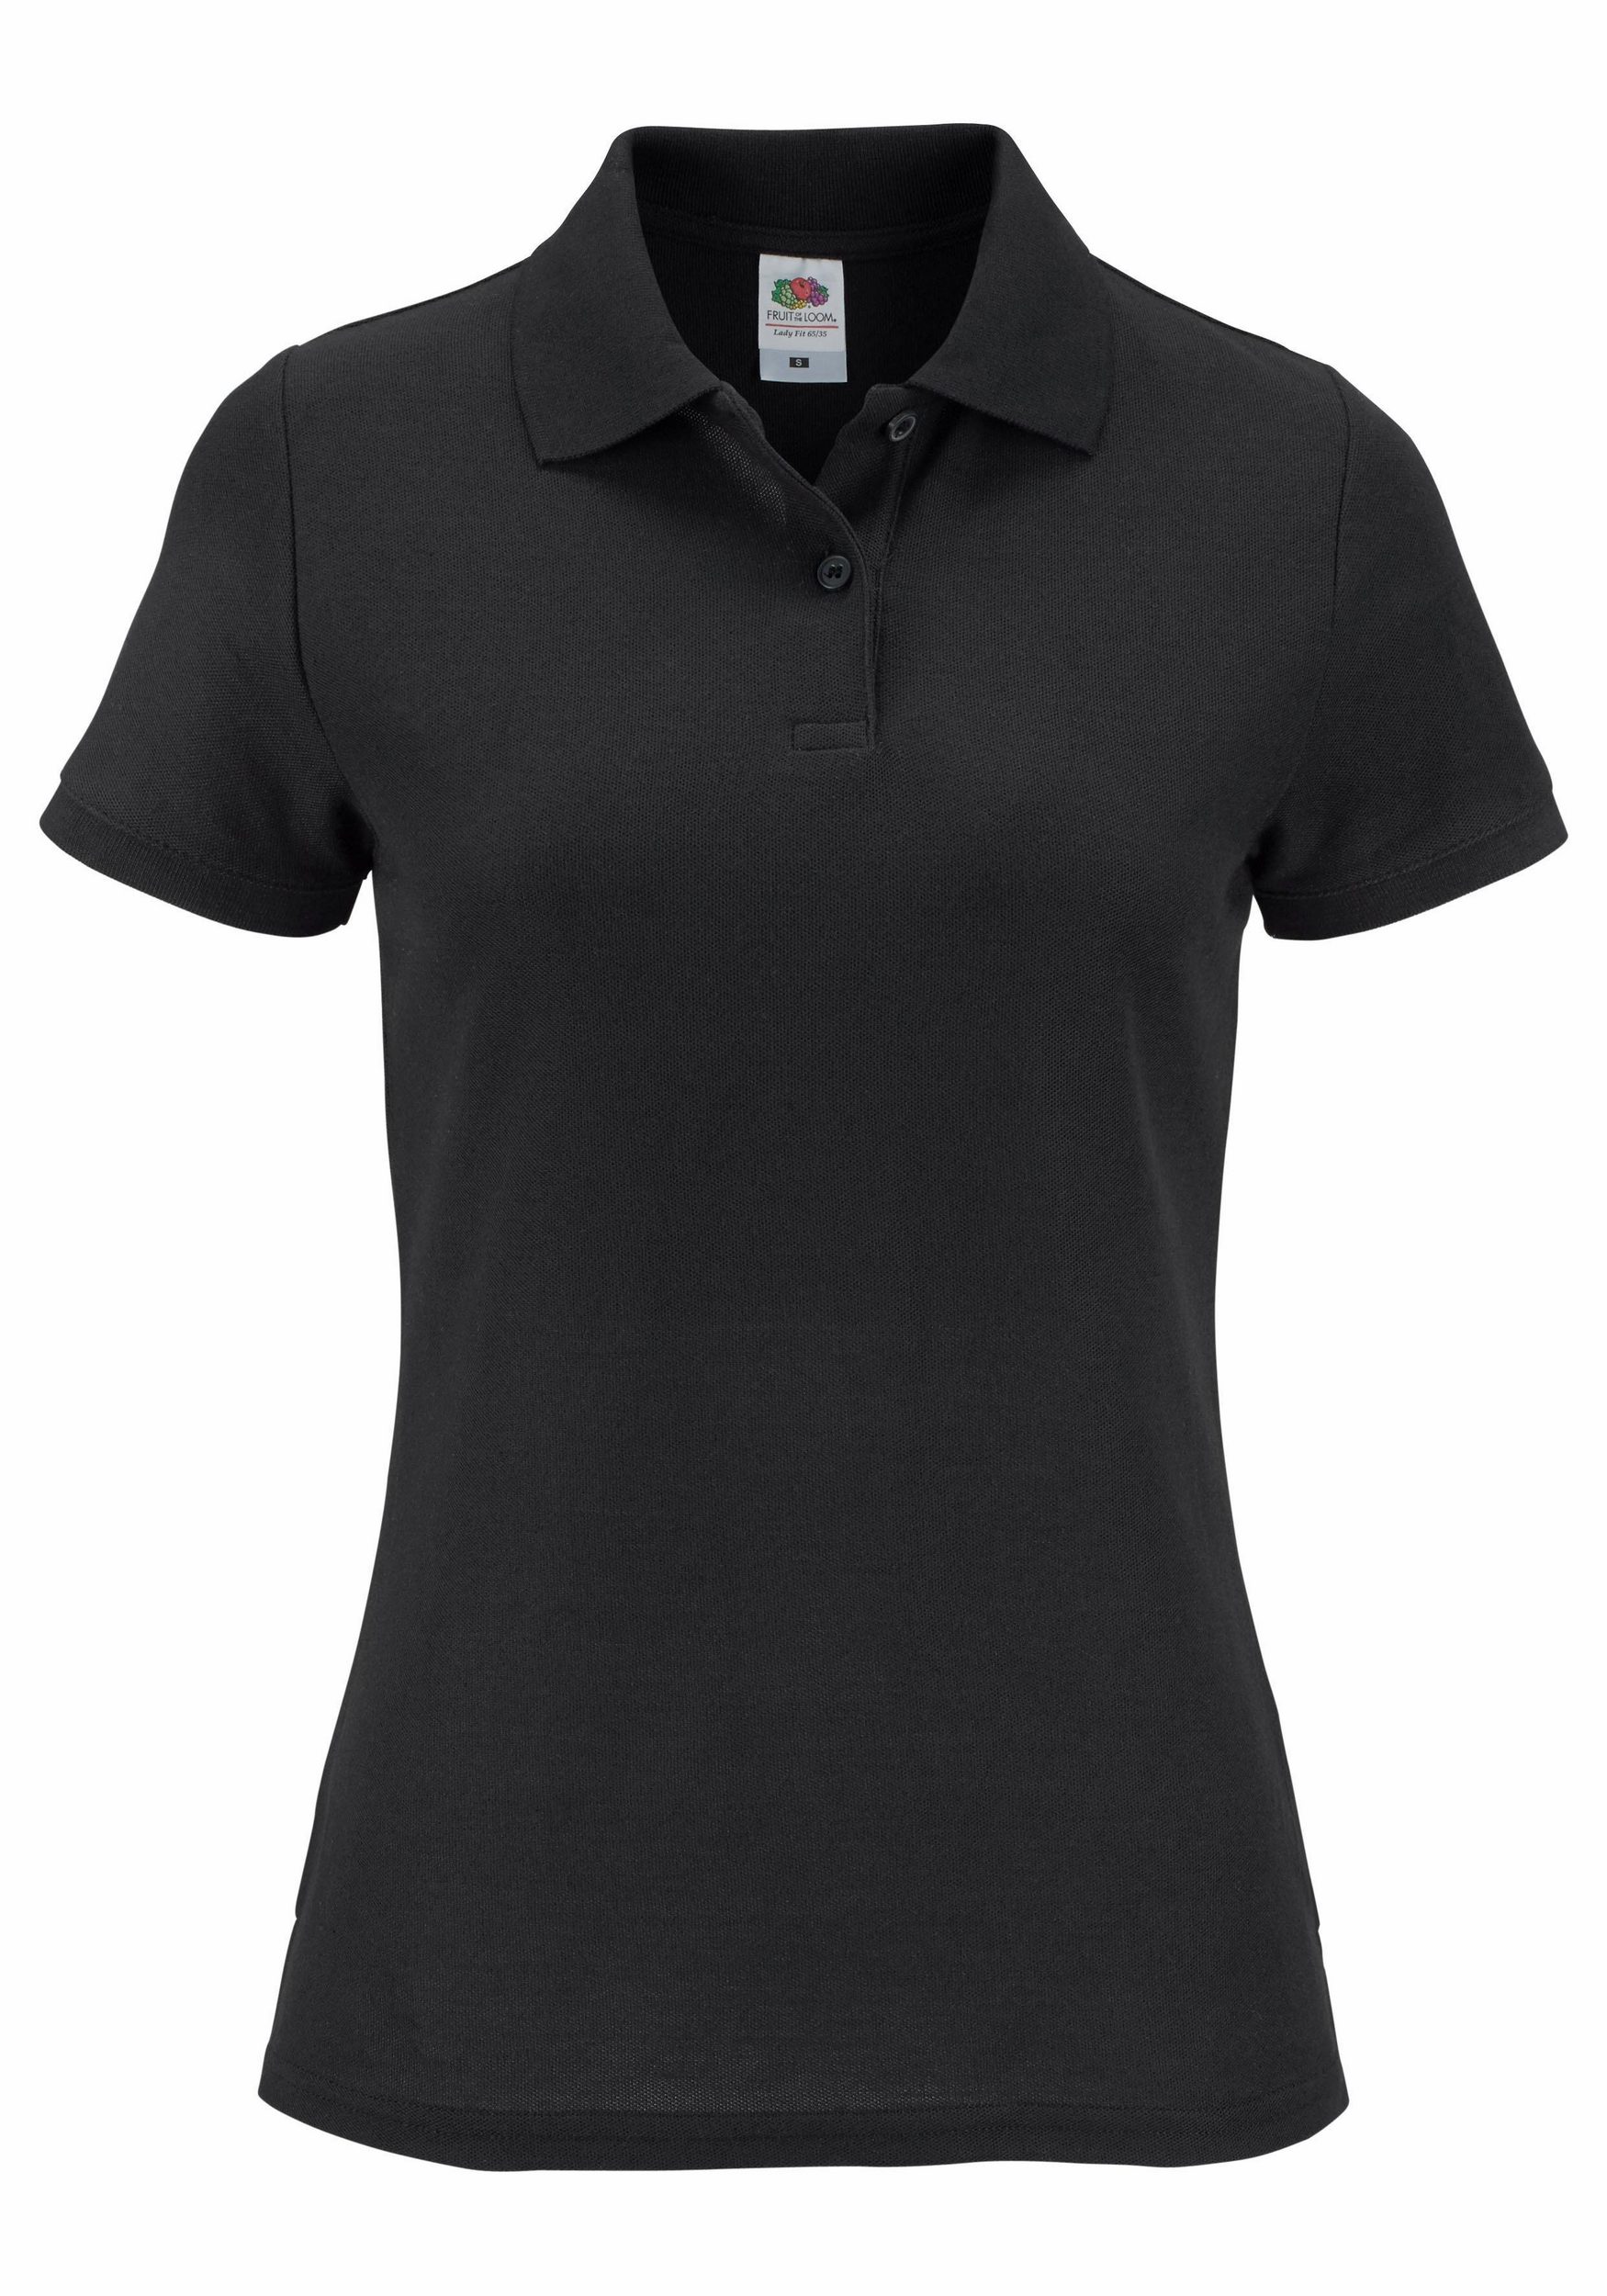 Ladies Women Polo Shirts Cotton Premium Lady Fit Polos Tops Shirts ...